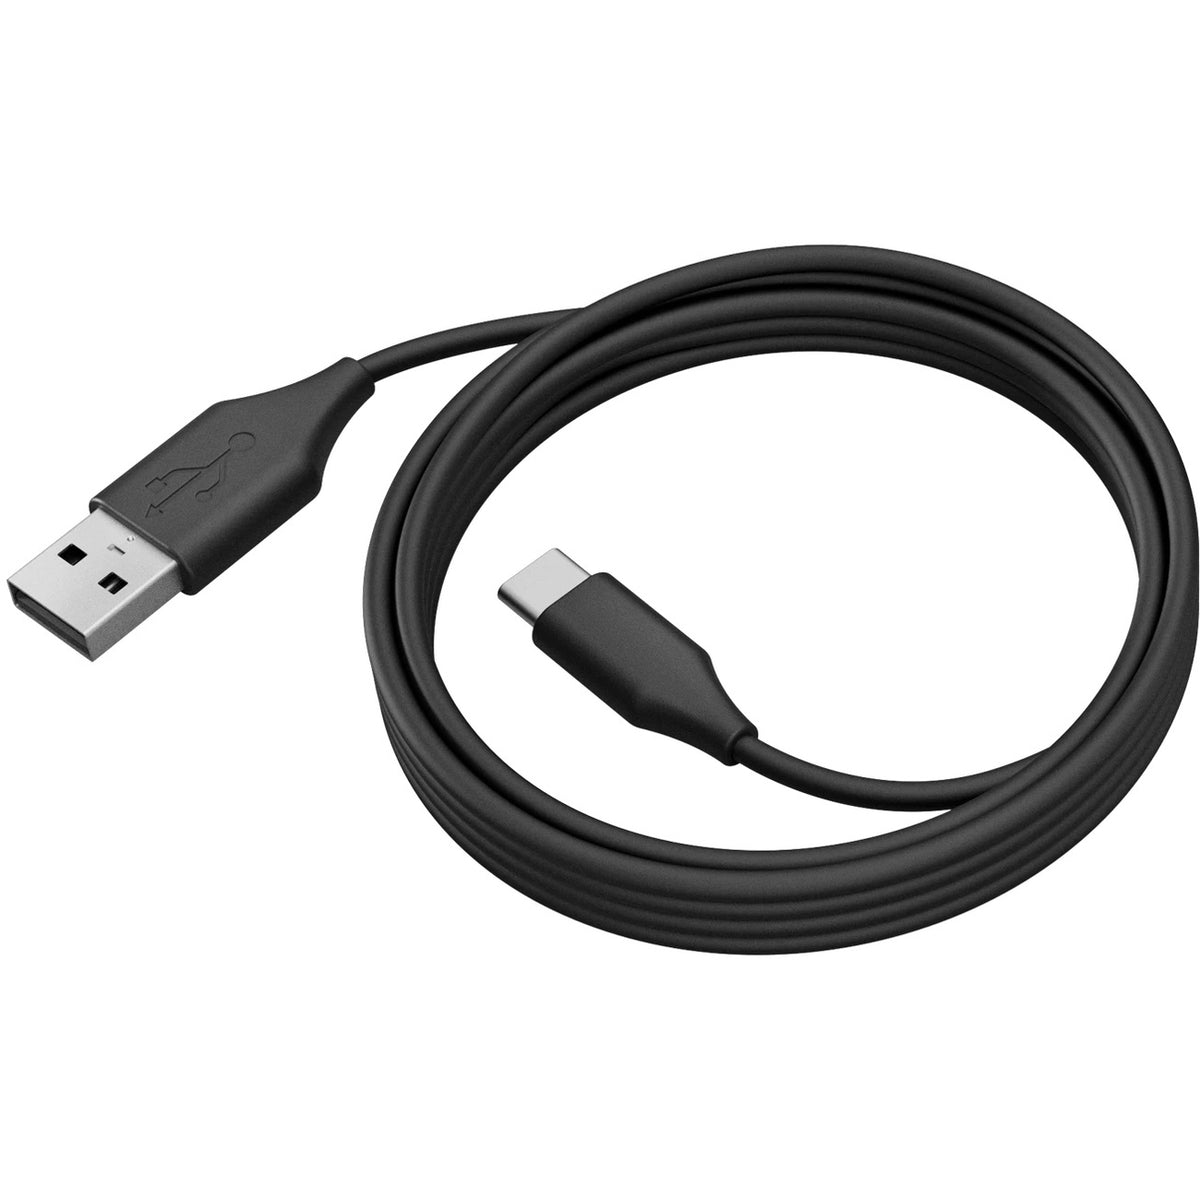 Jabra USB/USB-C Data Transfer Cable - 14202-10